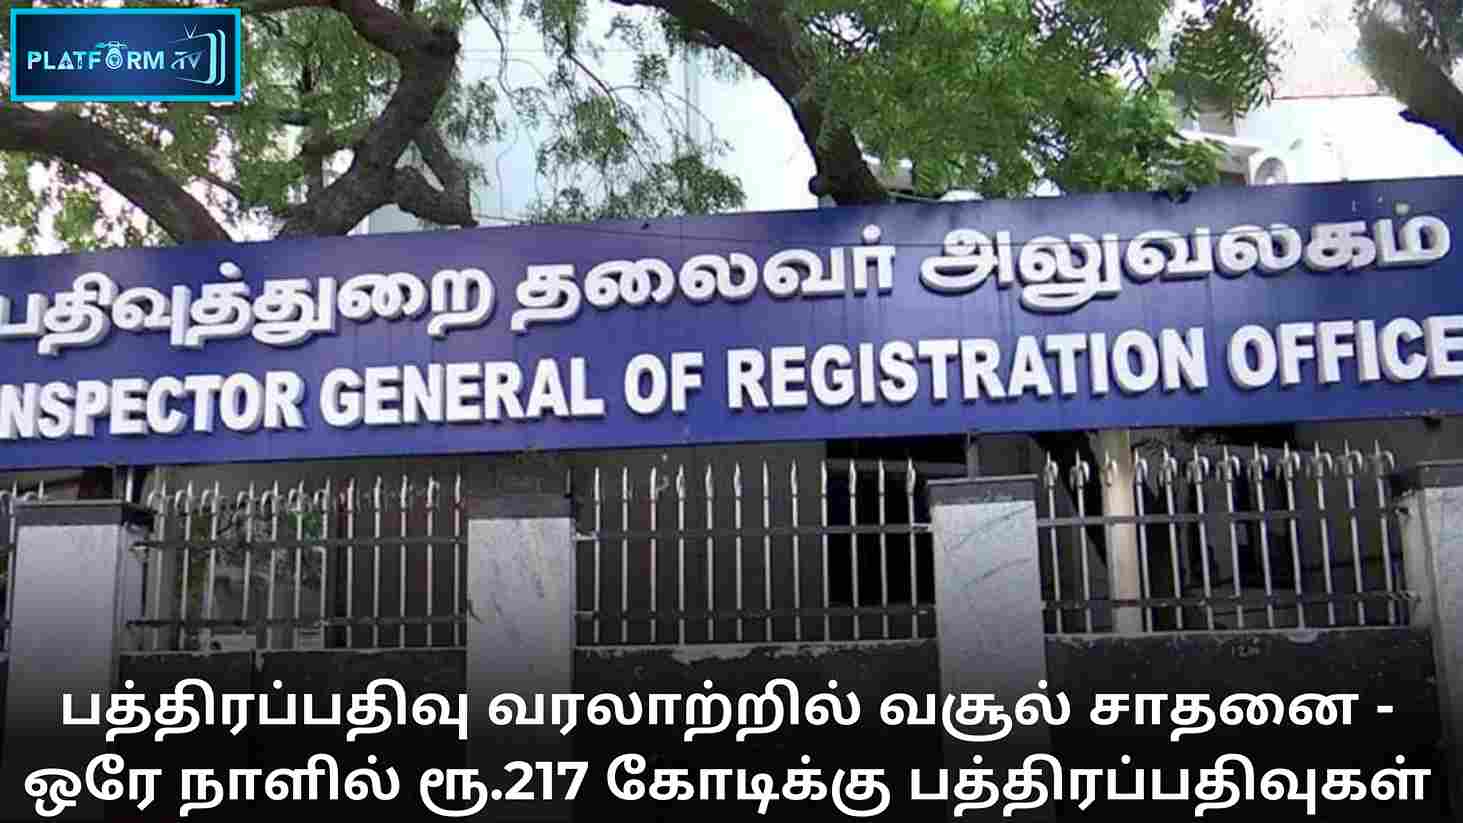 Registration Department One Day Revenue - Platform Tamil